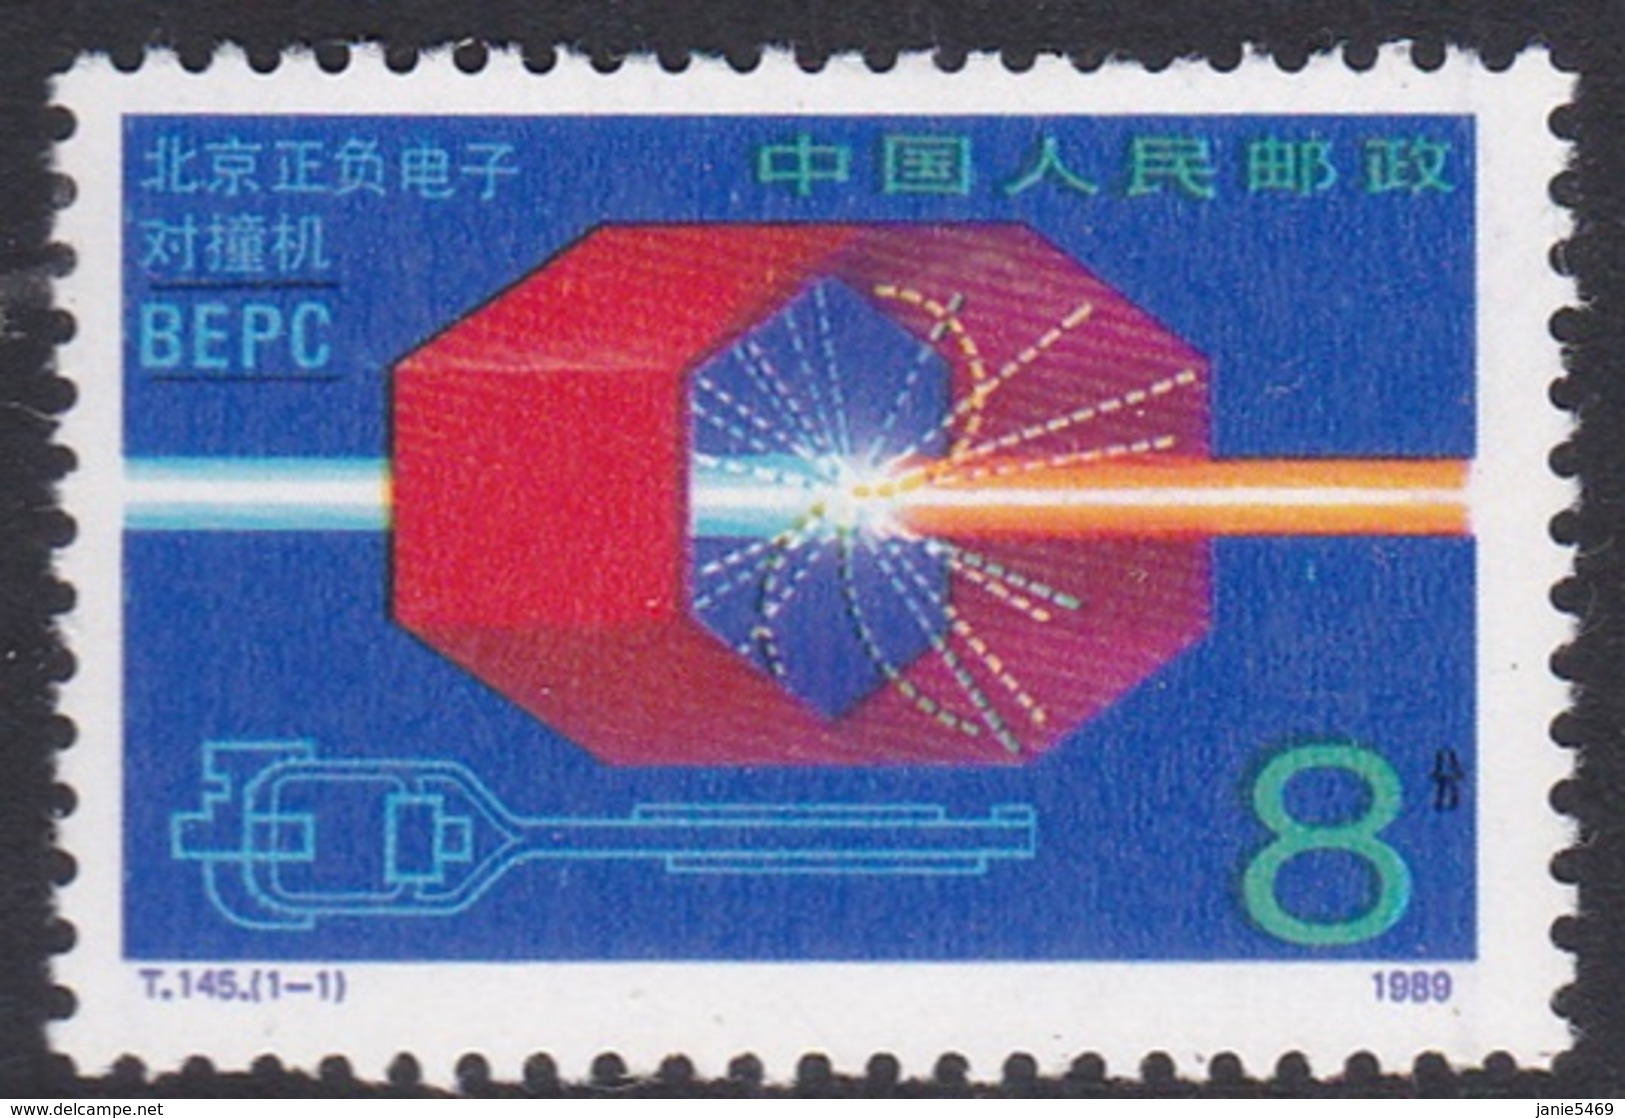 China People's Republic SG 3643 1989 Peking Electron Positron Collider, Mint Never Hinged - Ongebruikt